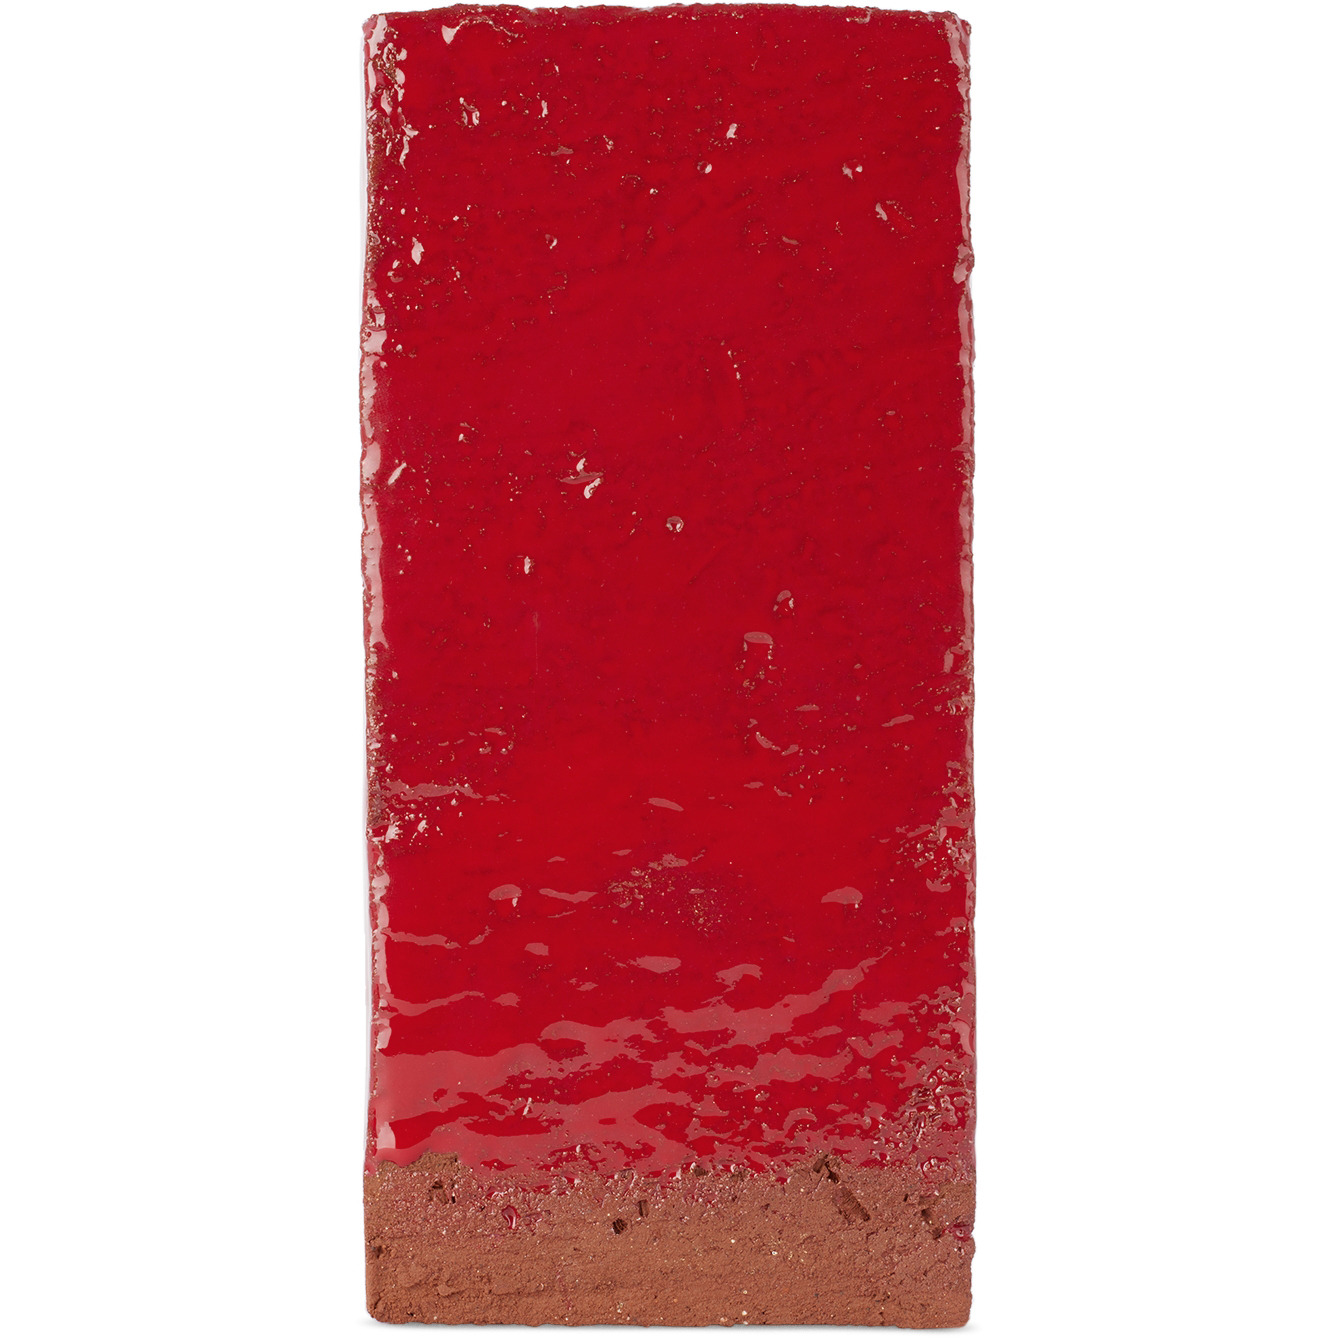 NIKO JUNE SSENSE Exclusive Orange 'A Single Brick' Candle Holder - image 1